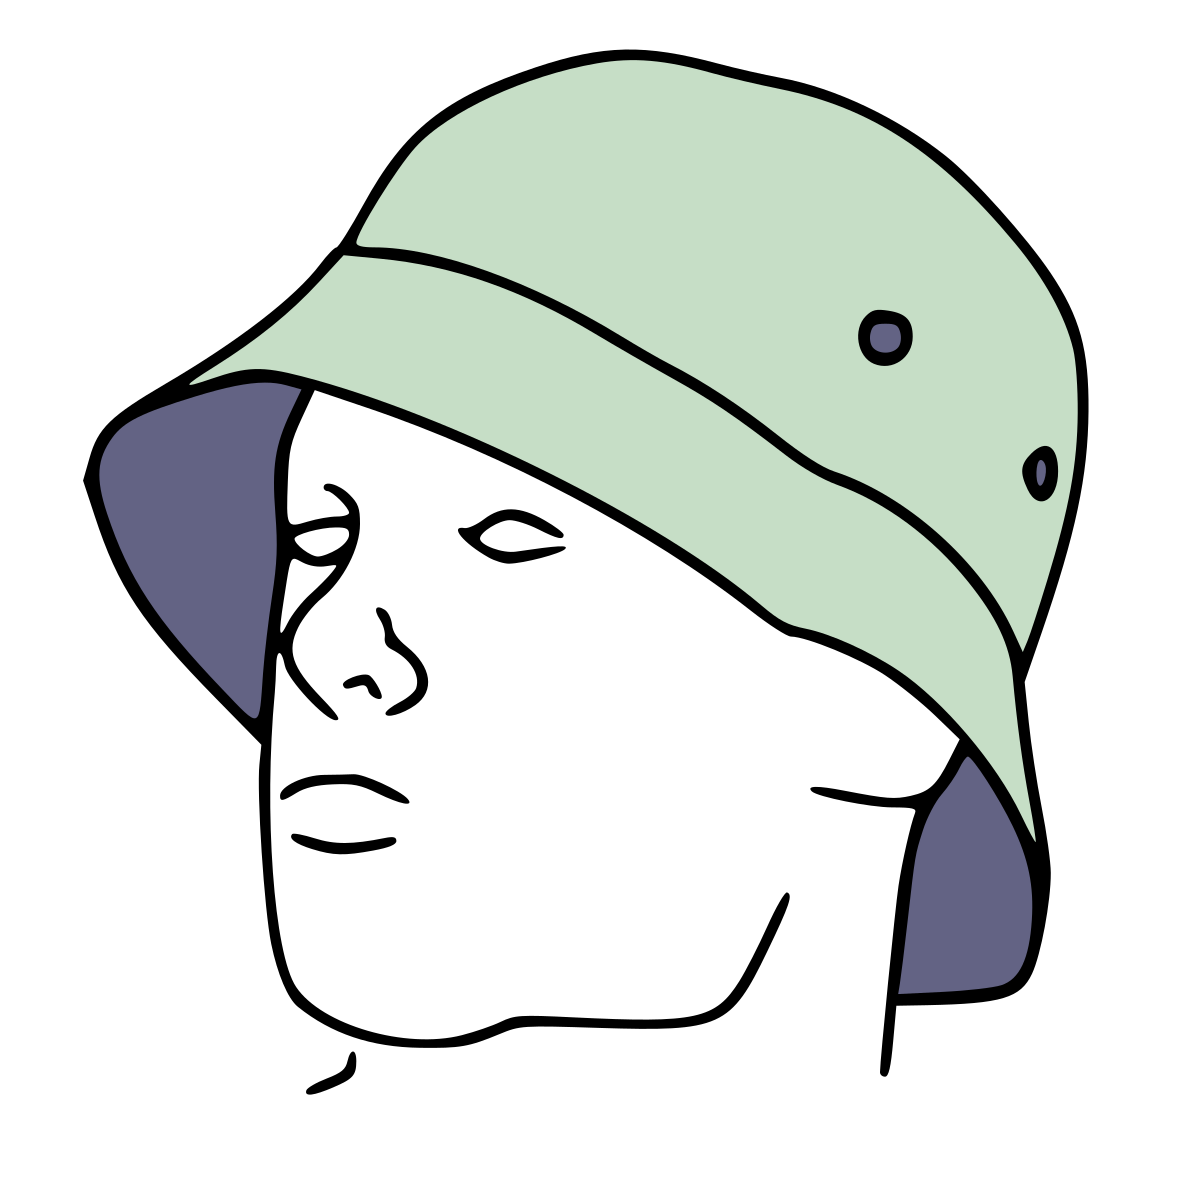 Bucket hat - Wikipedia